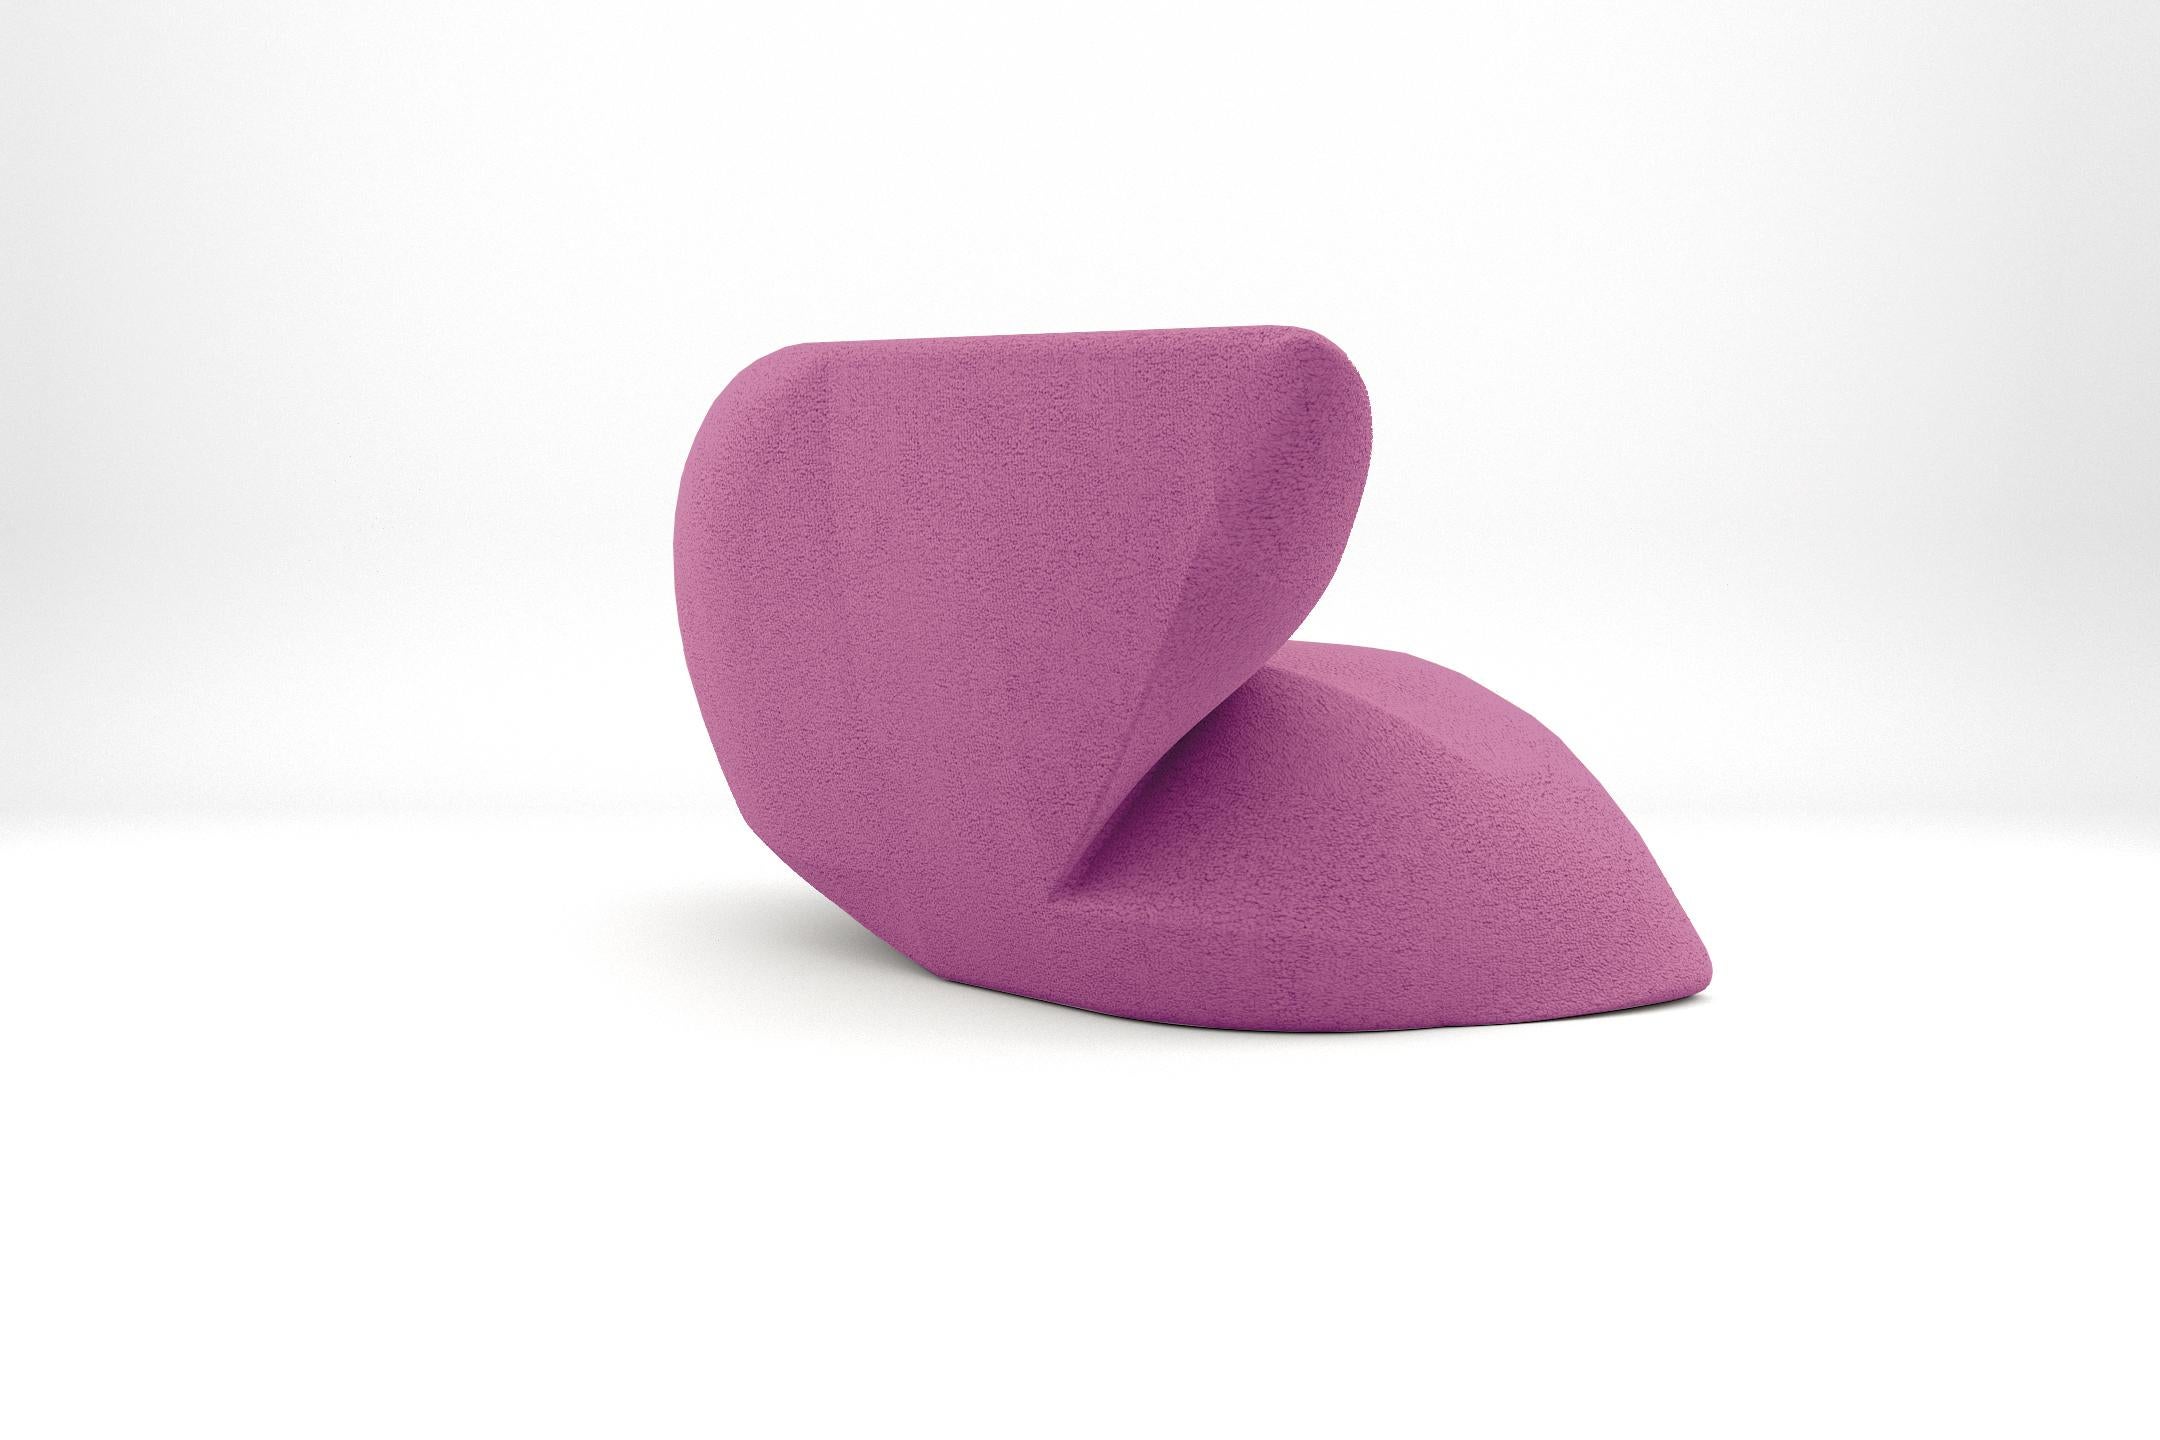 European Delta Armchair - Modern Violet Upholstered Armchair For Sale